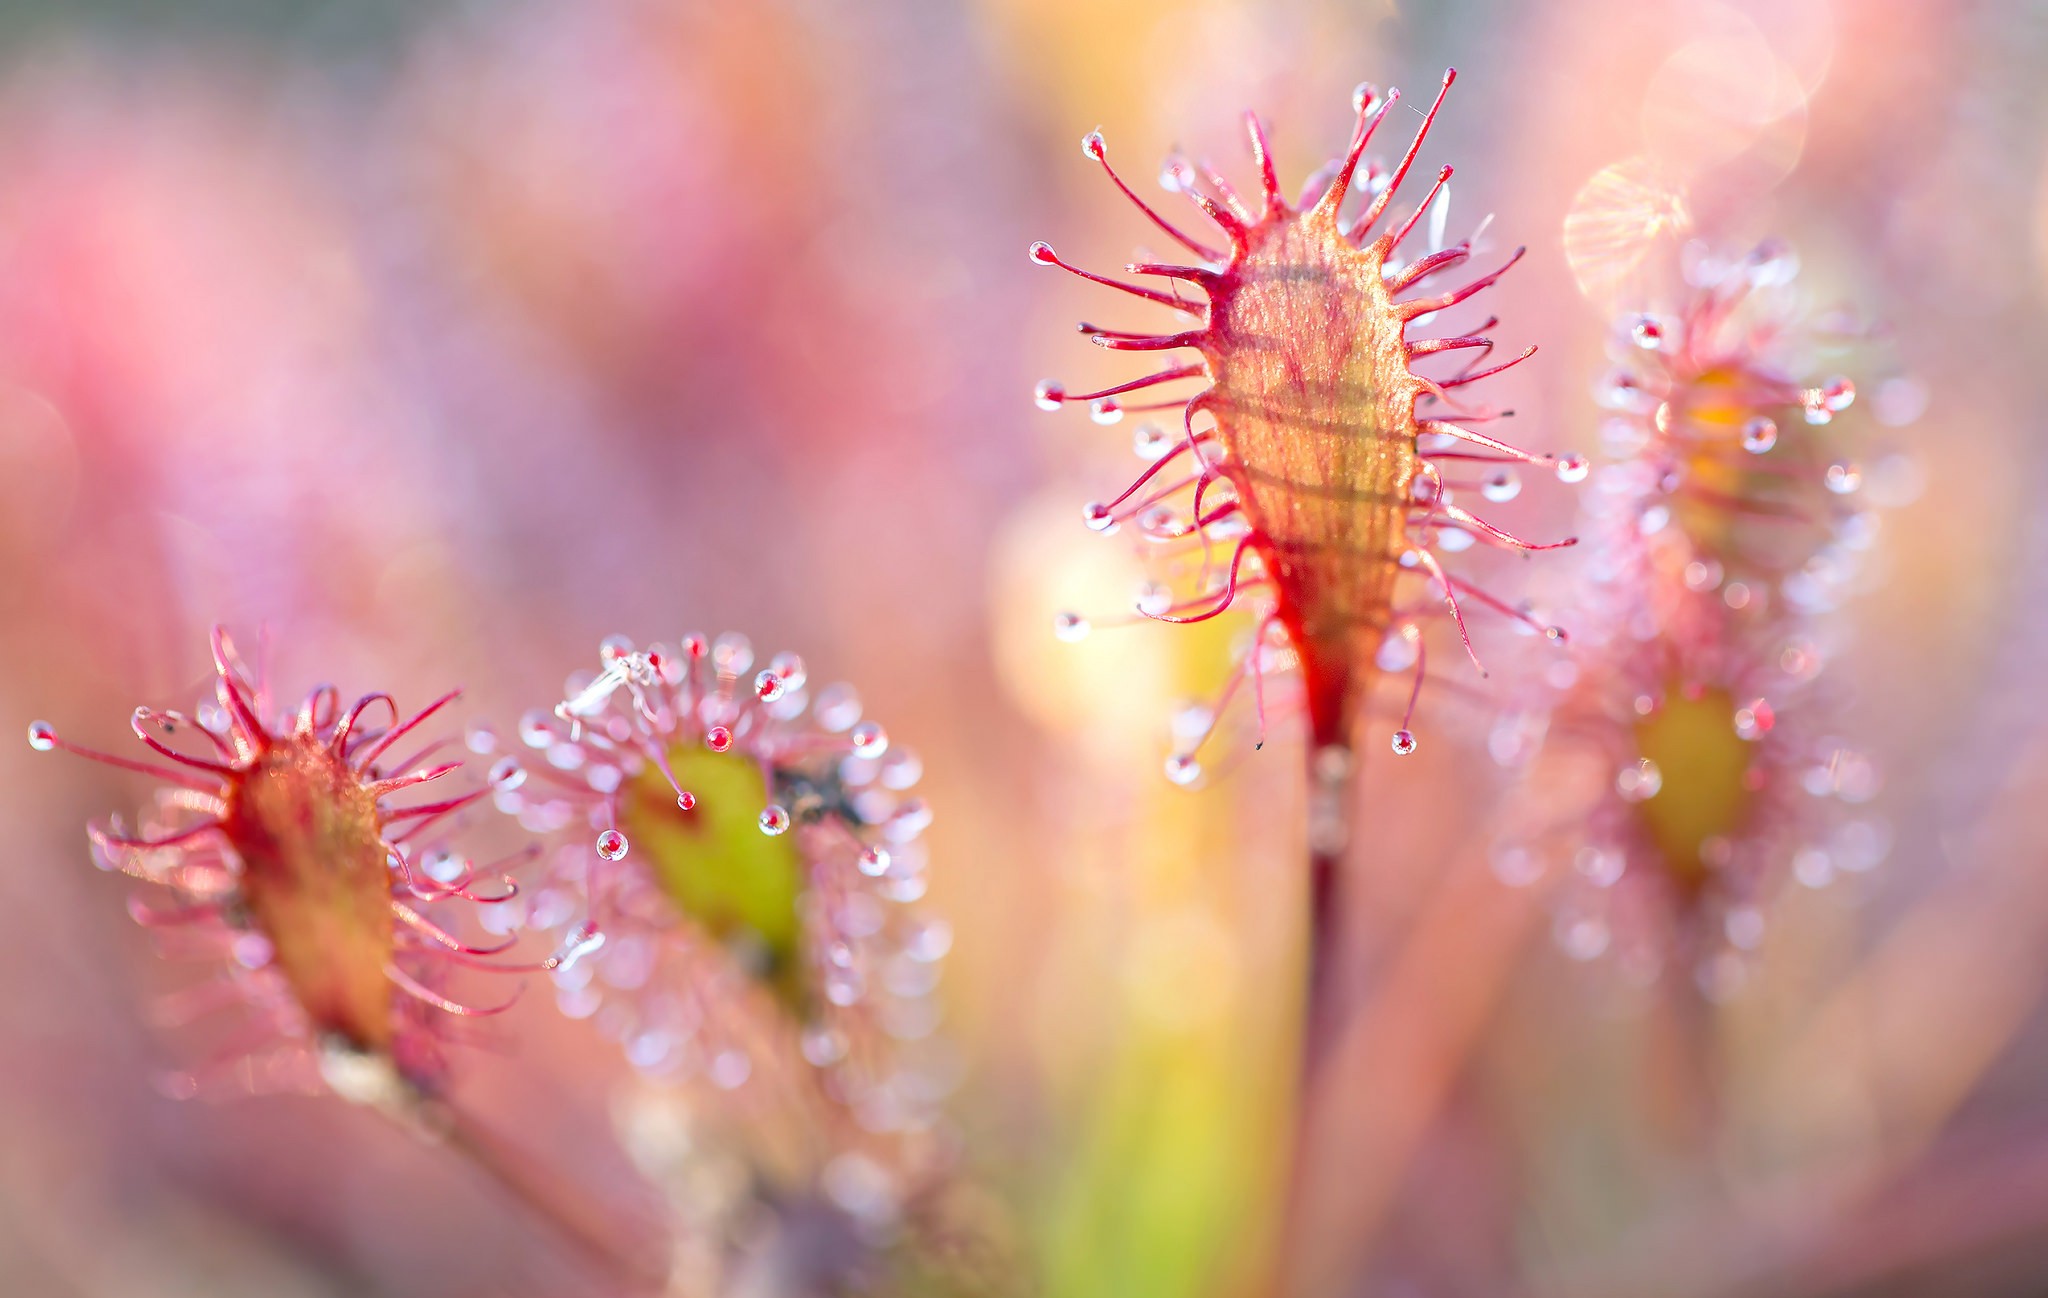 General 2048x1298 plants macro flowers carnivore pink water drops sunlight nature depth of field vibrant